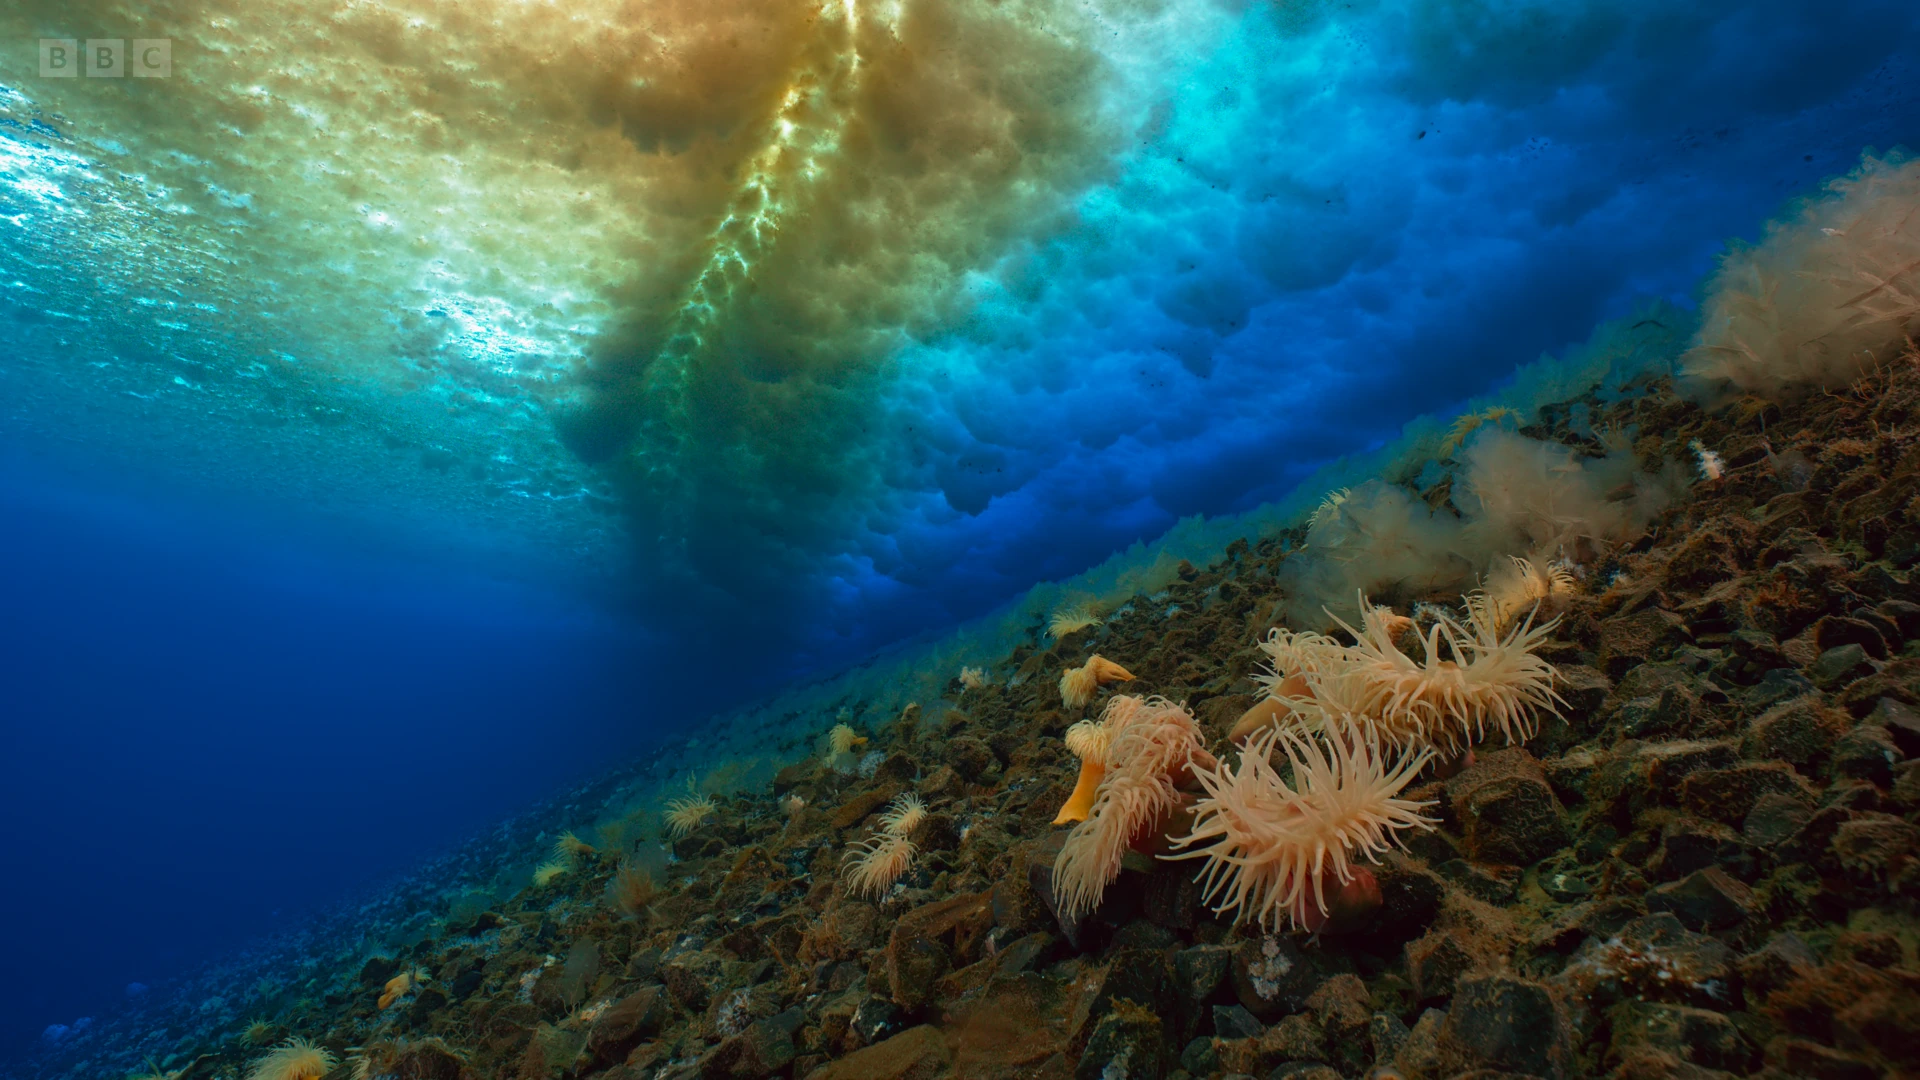 Sea anemone (Urticinopsis antarctica) as shown in Seven Worlds, One Planet - Antarctica